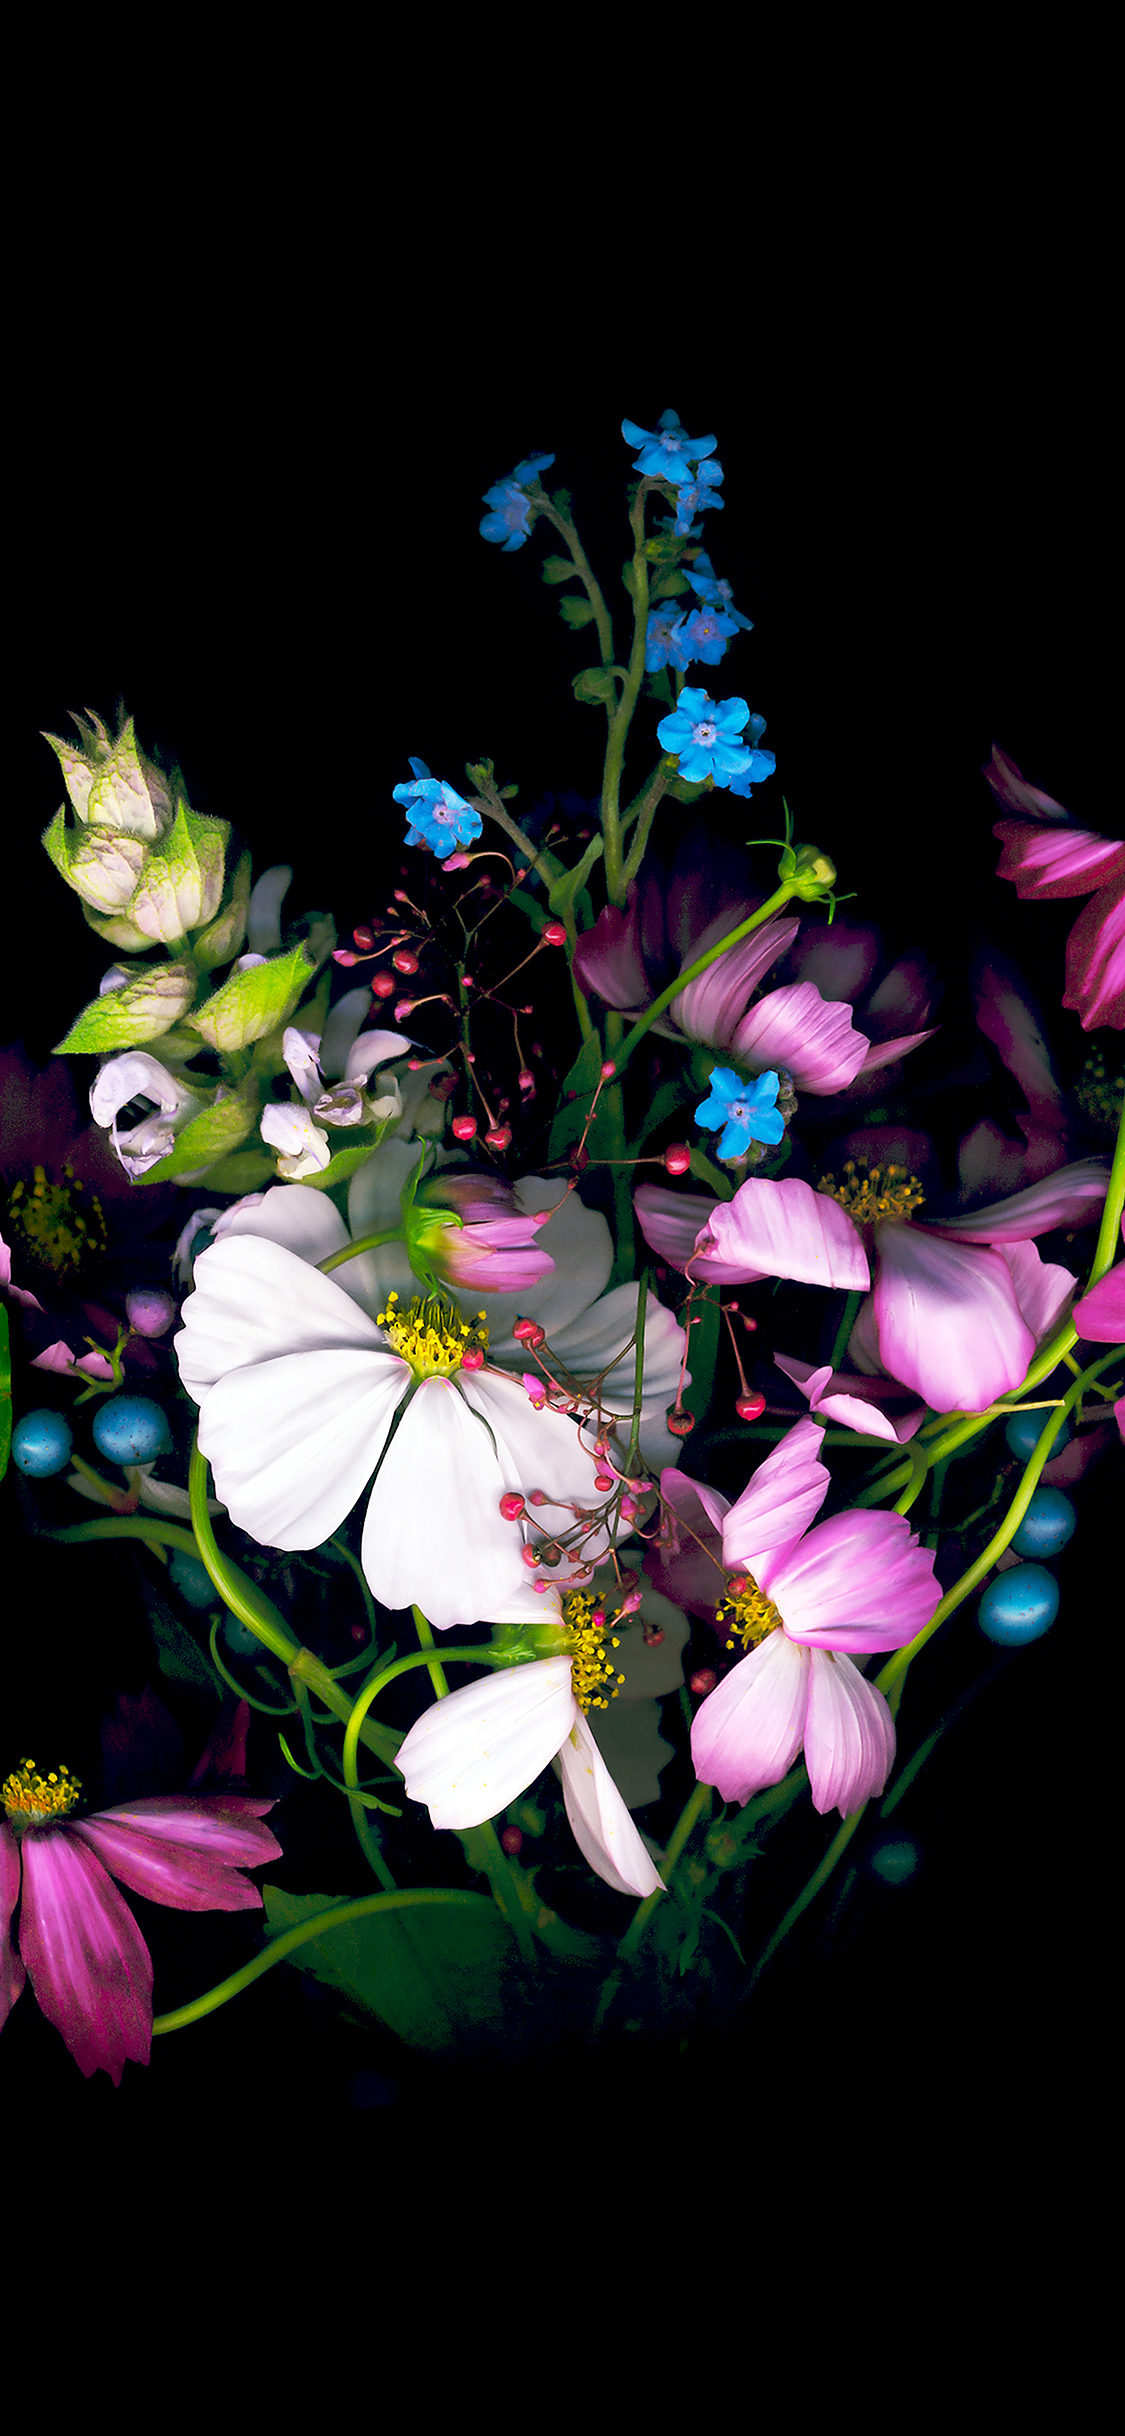 carta da parati floreale iphone se,pianta fiorita,fiore,petalo,pianta,fotografia di still life